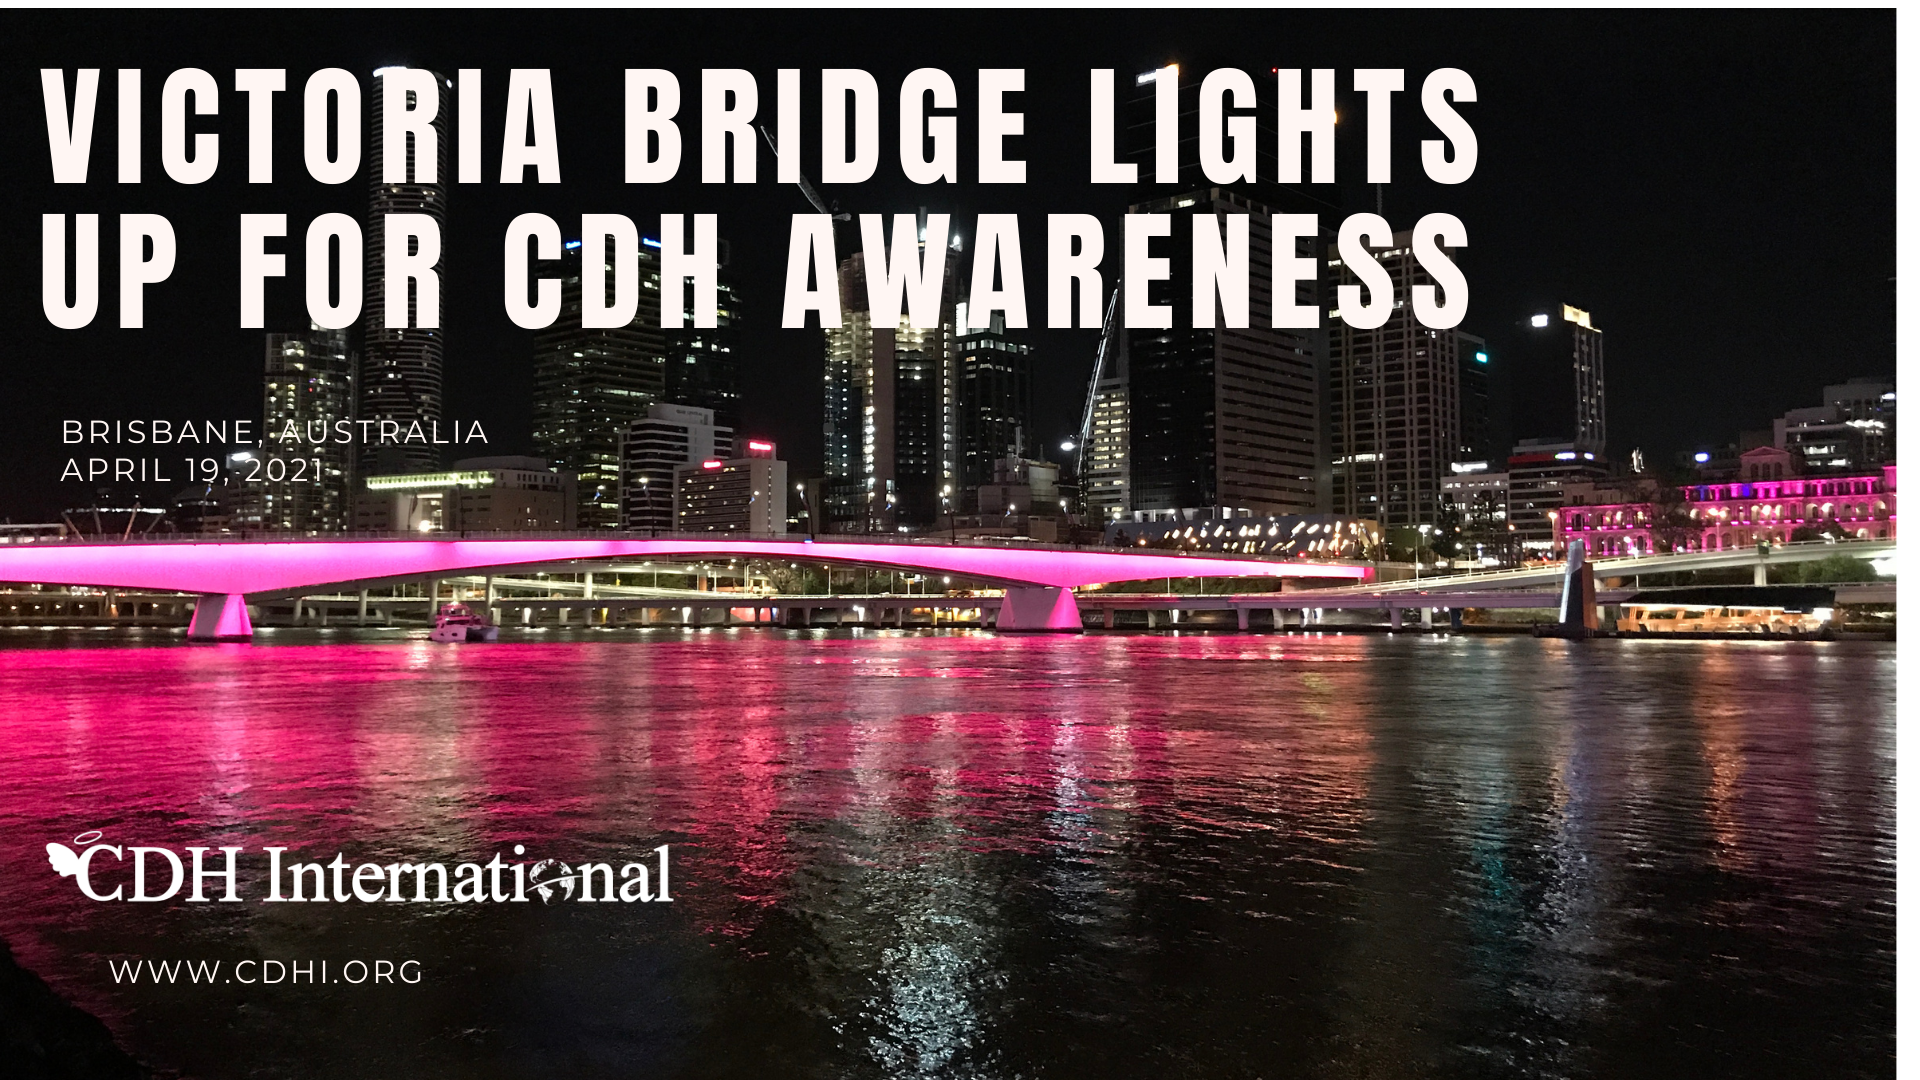 Bell Tower Lights Up For CDH Awareness